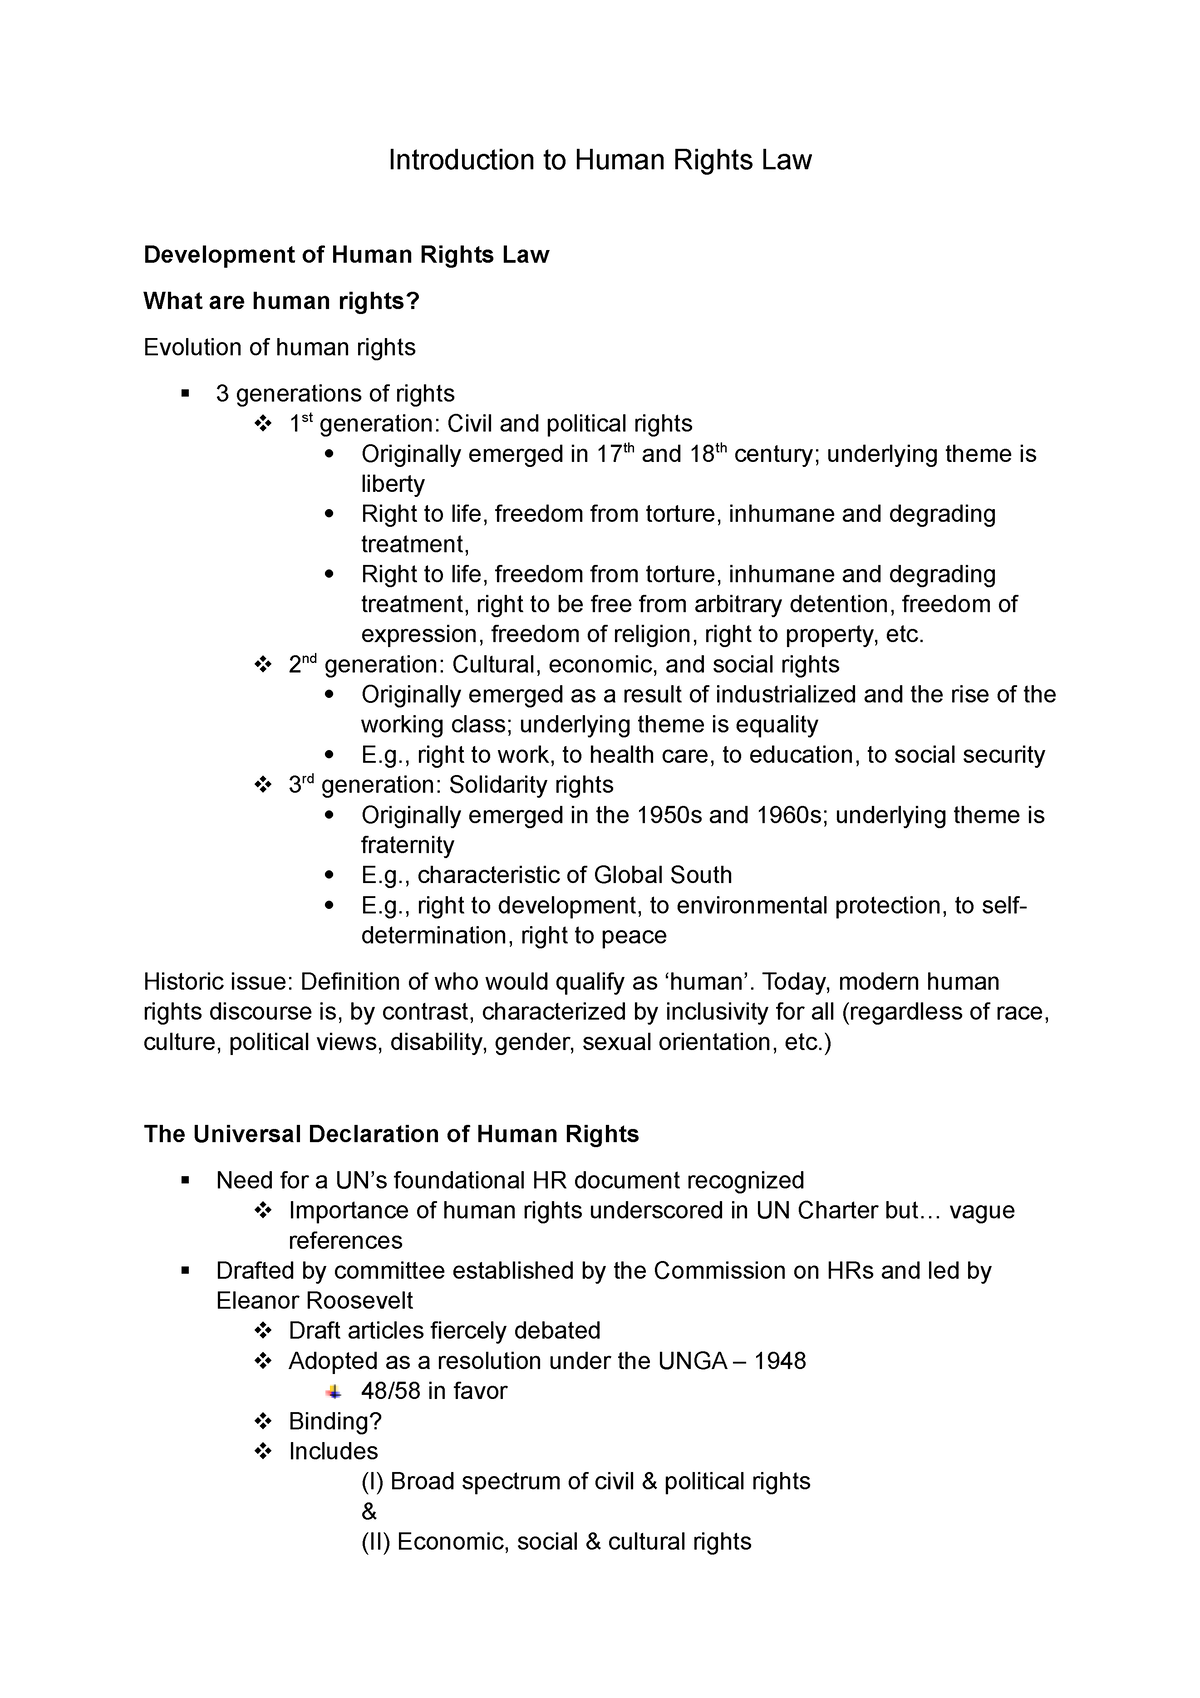 dissertation topics on human rights law